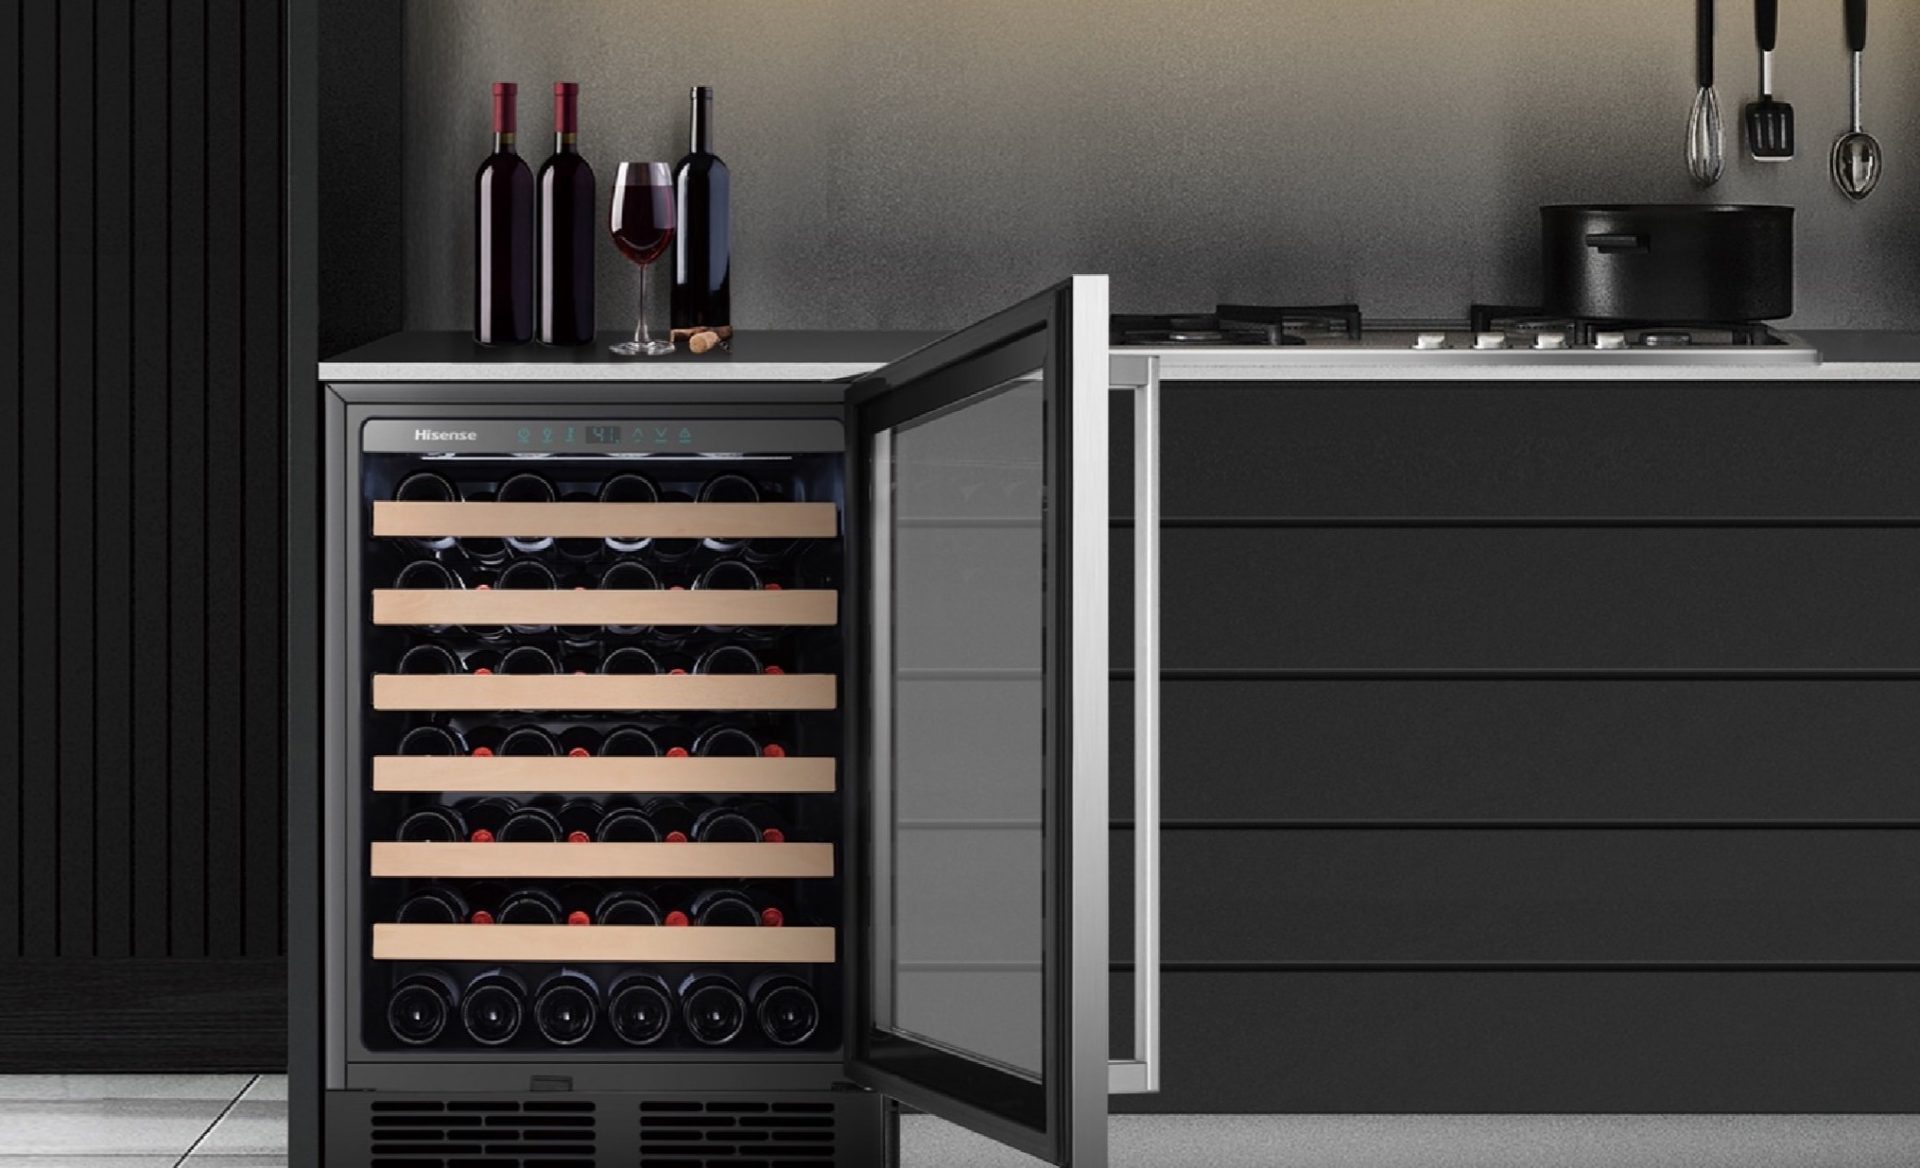 Hisense wine fridge